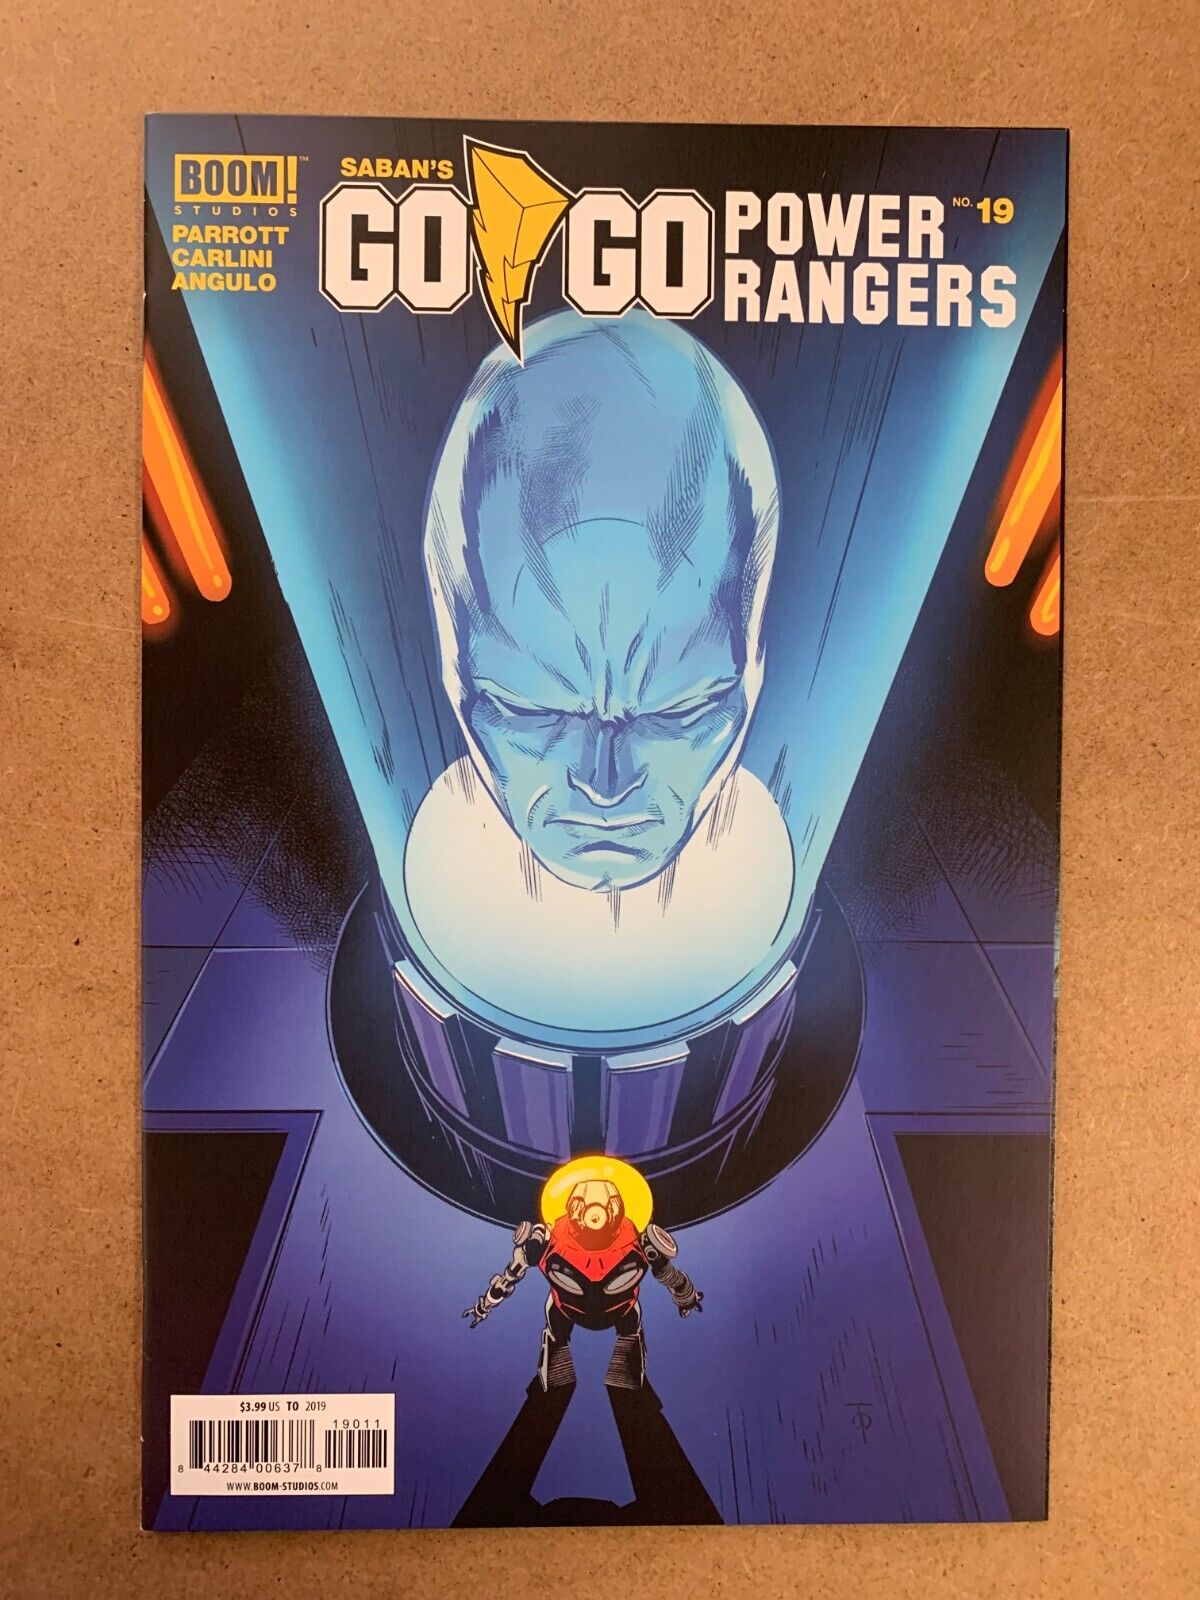 Go Go Power Rangers #19 - Apr 2019 - BOOM! Studios - (760A)